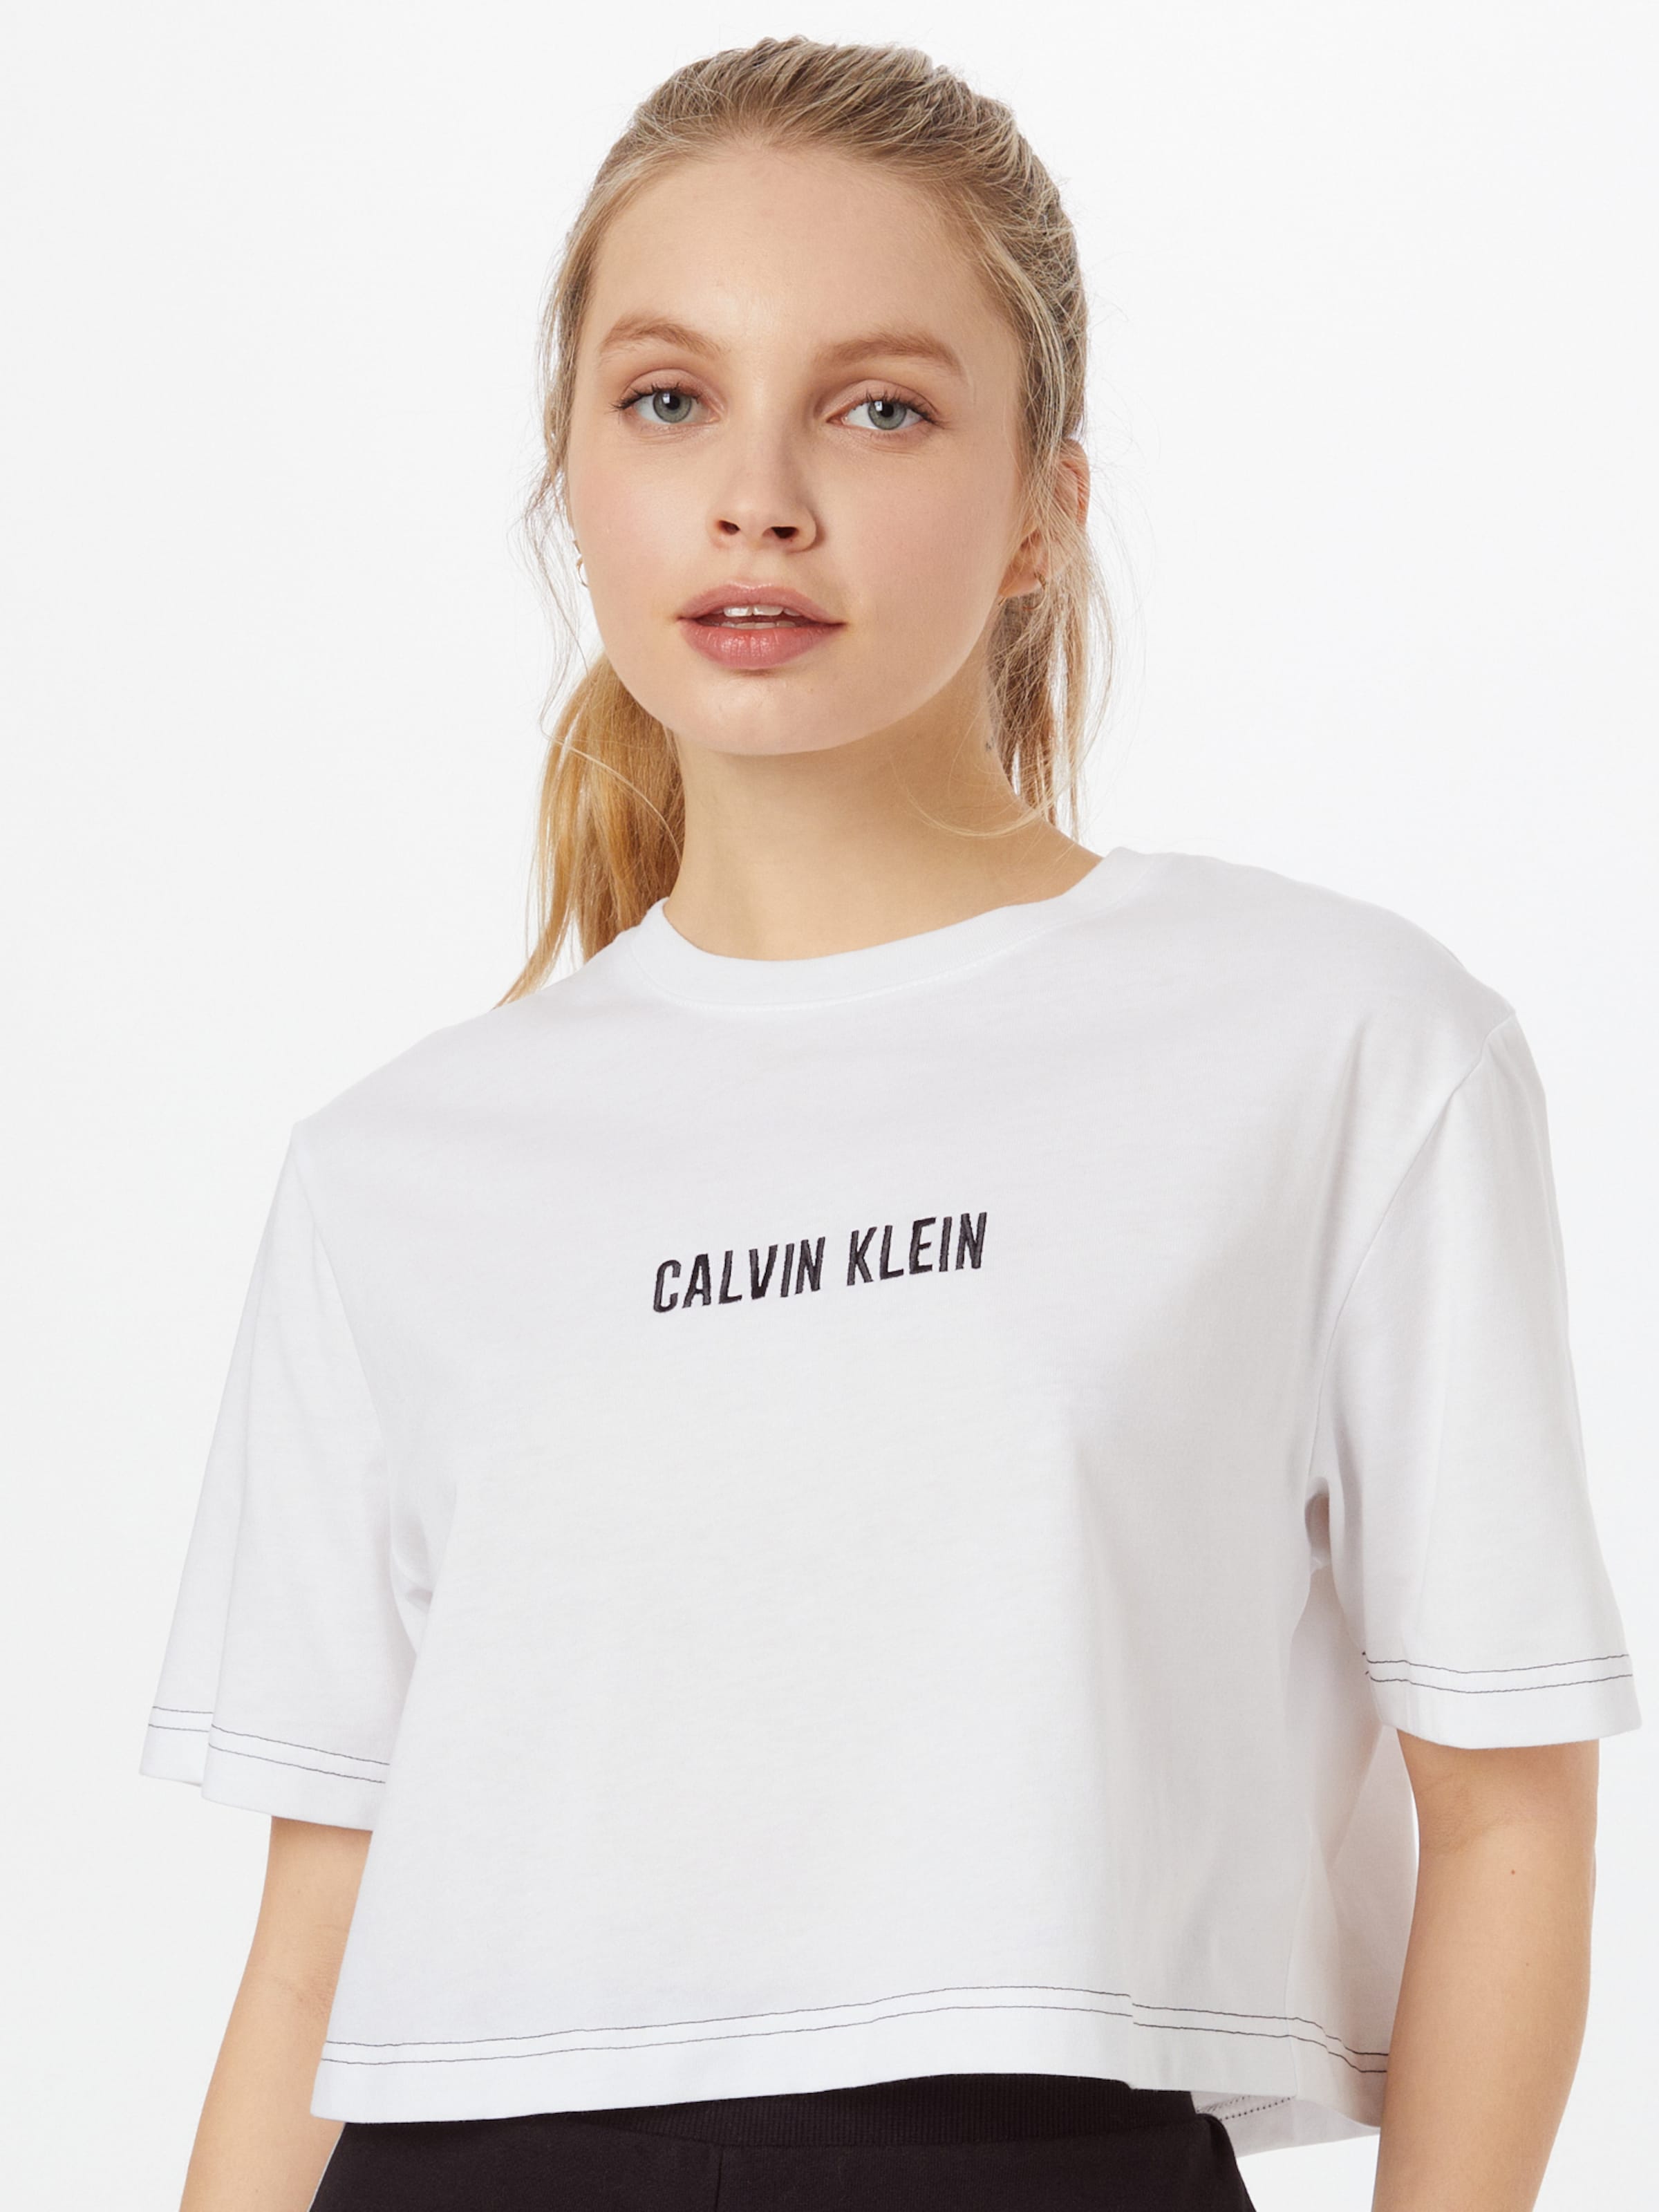 calvin klein sport shirt